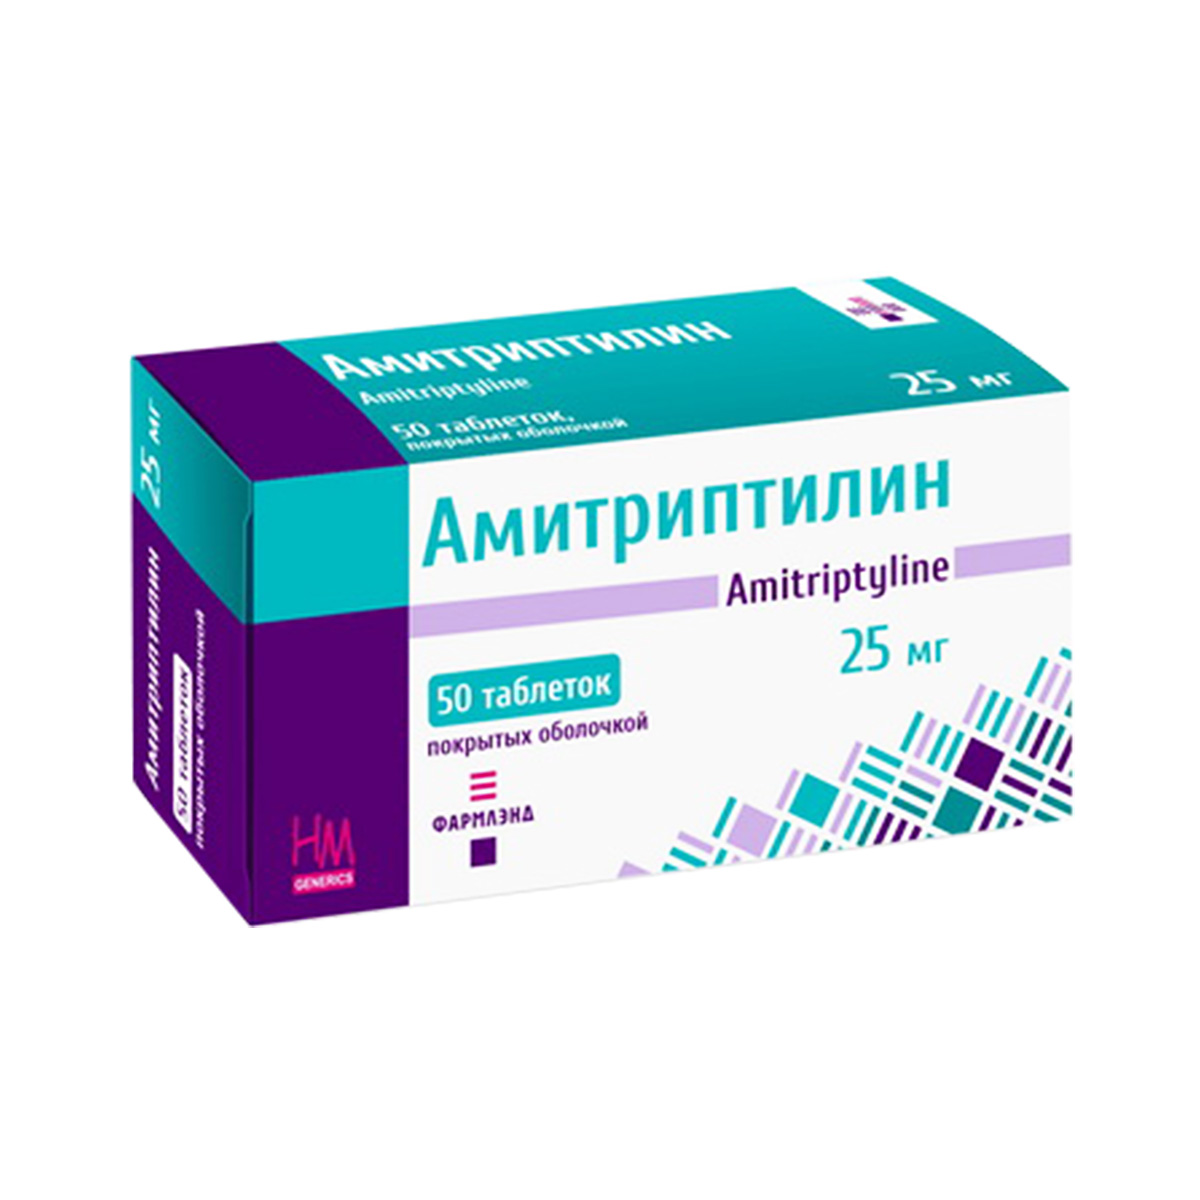 Амитриптилин 25 мг таблетки покрытые оболочкой 50 шт